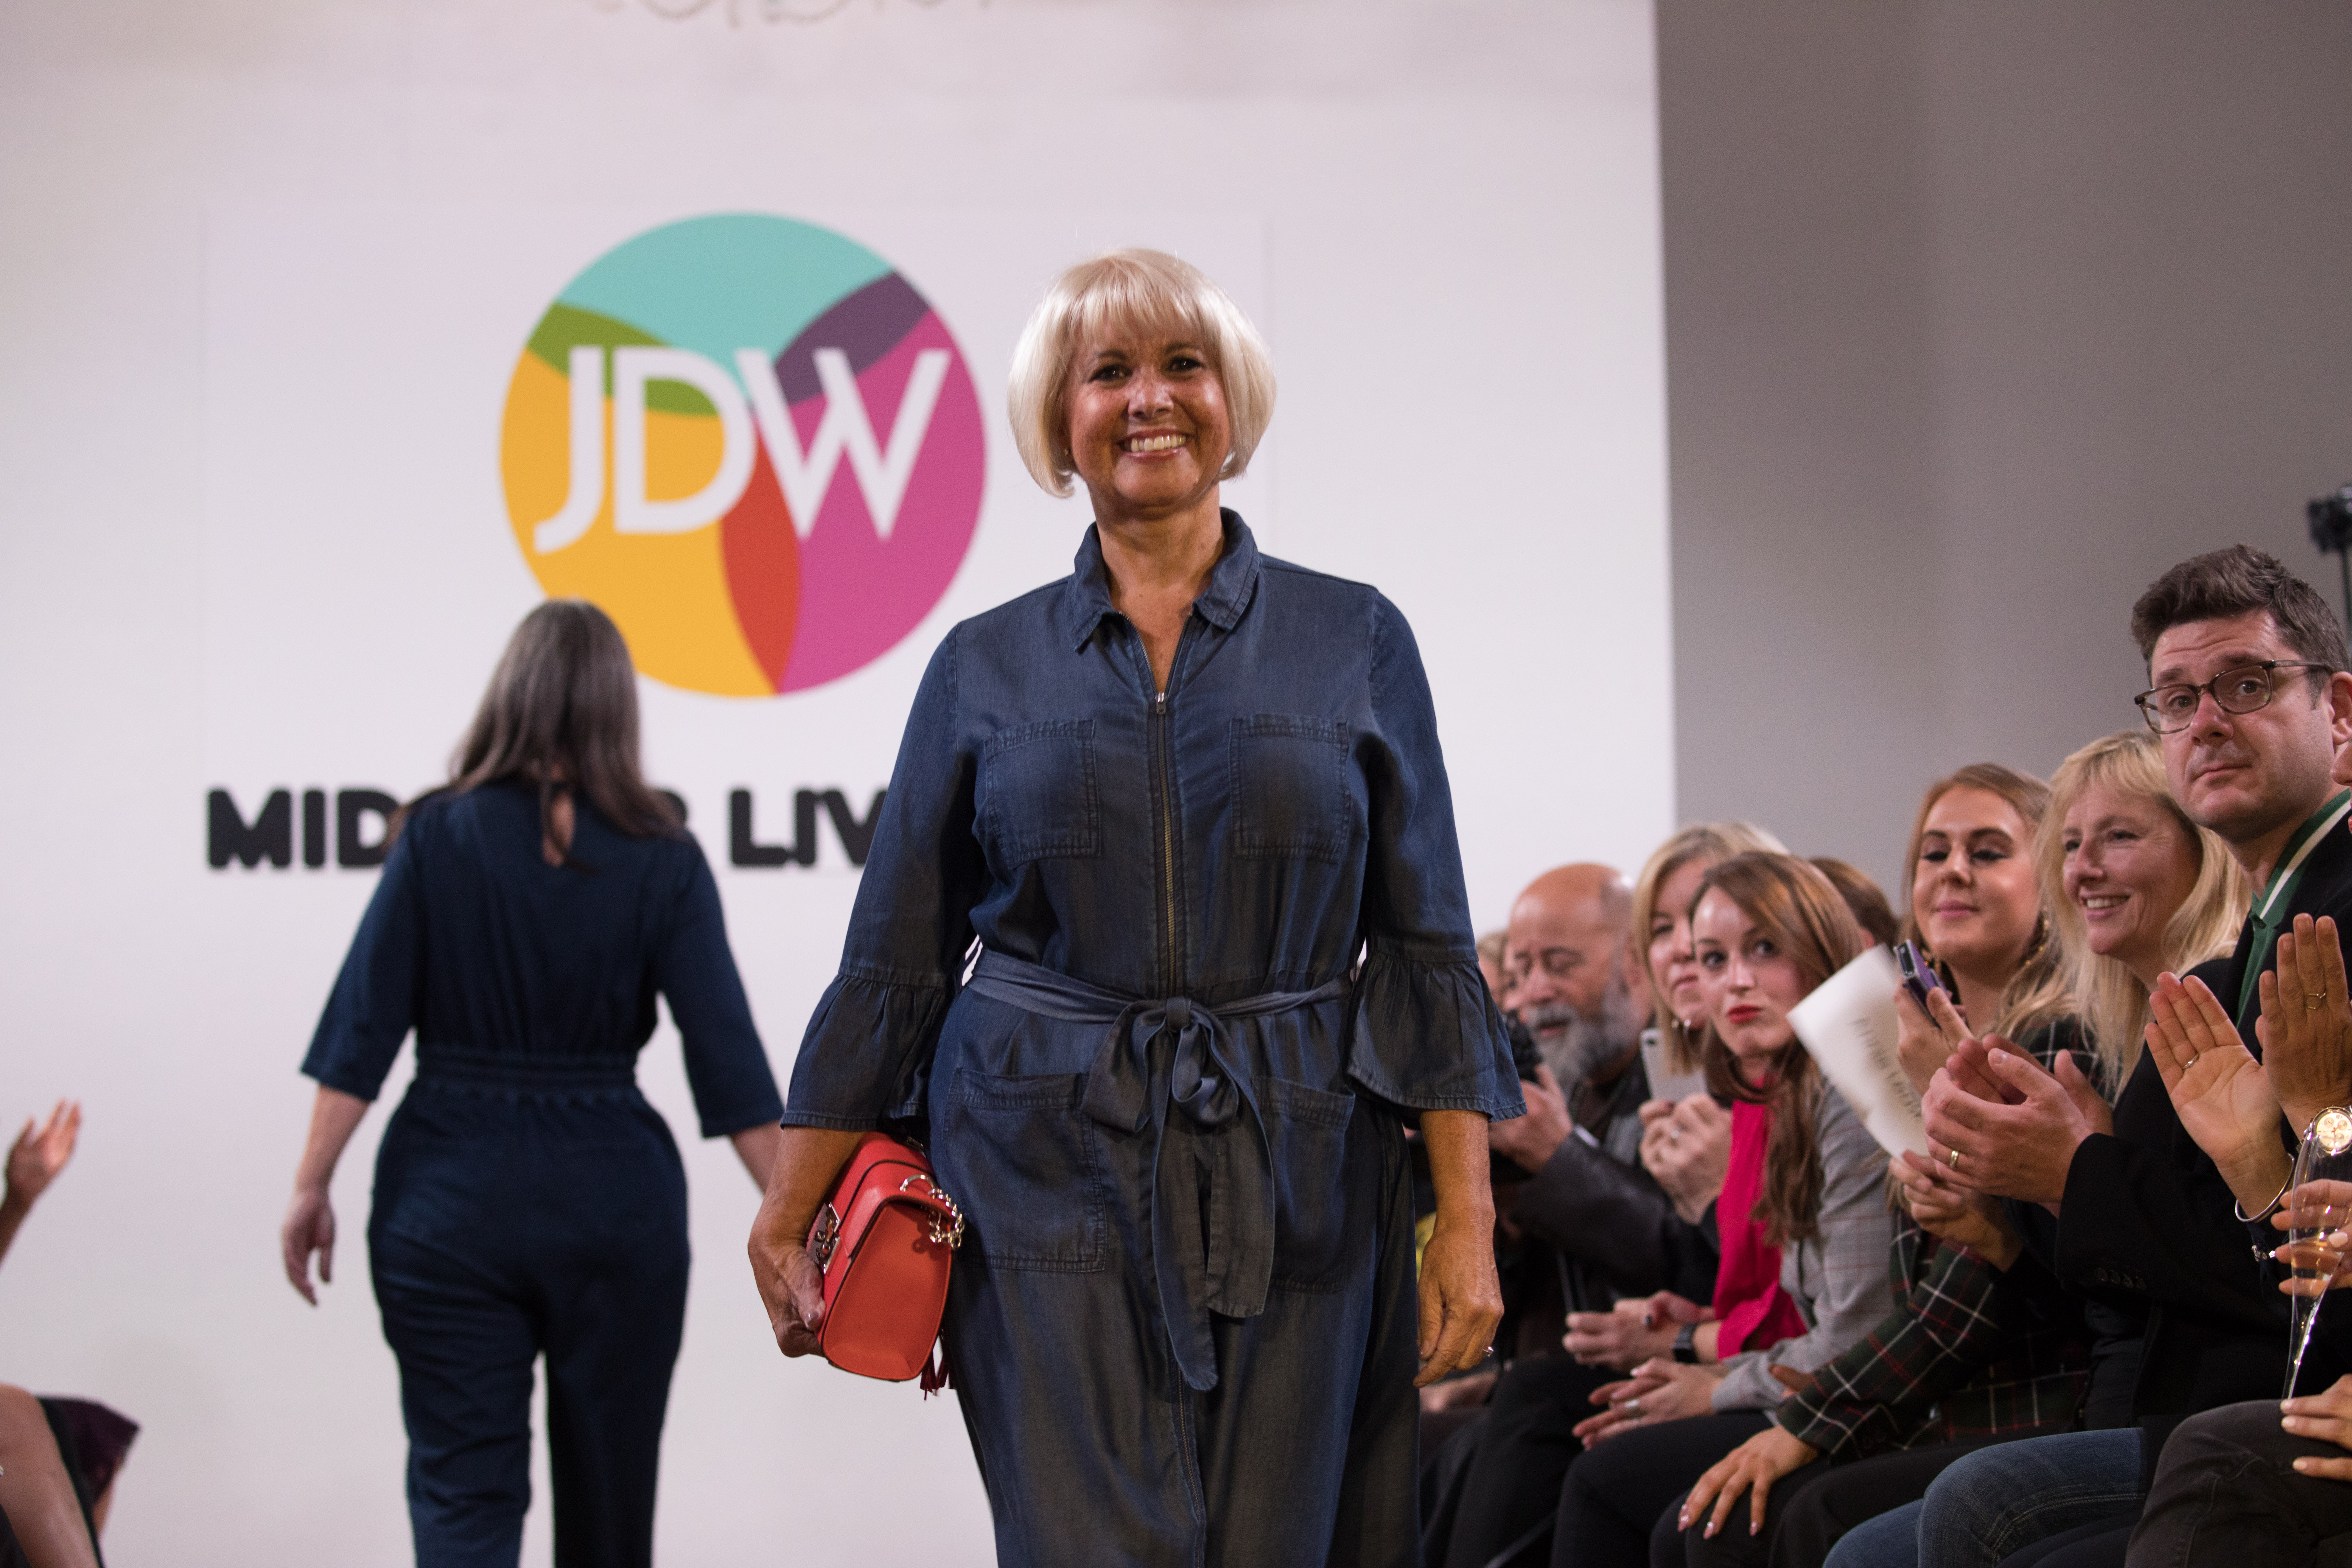 Midster model search winner Sue Hammond-Doutre walks the JD Williams Midster catwalk